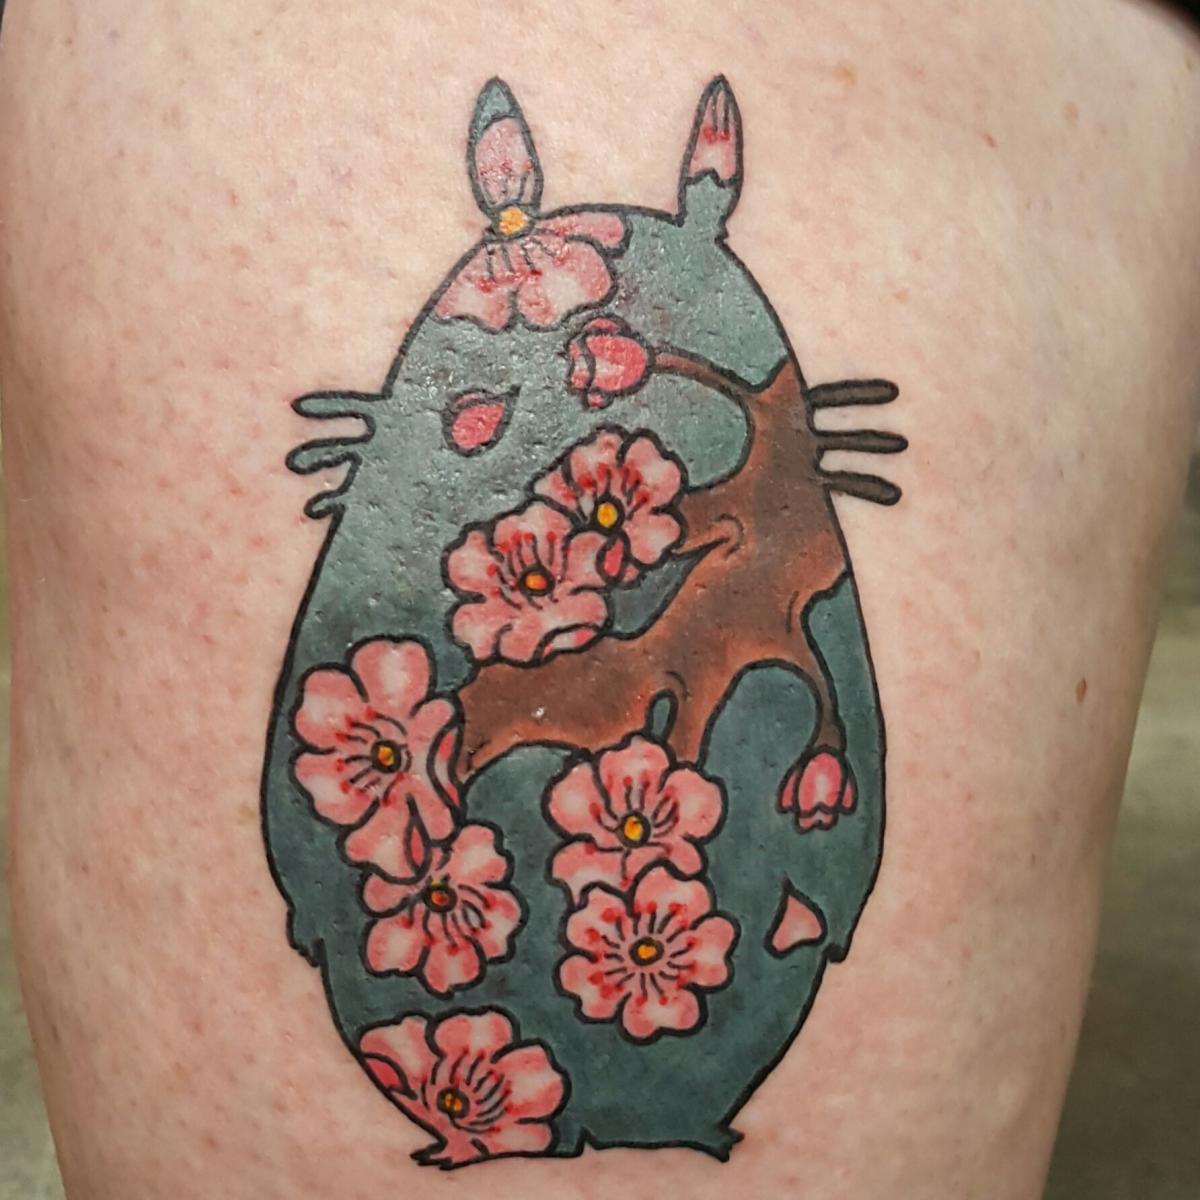 Totoro with sakura